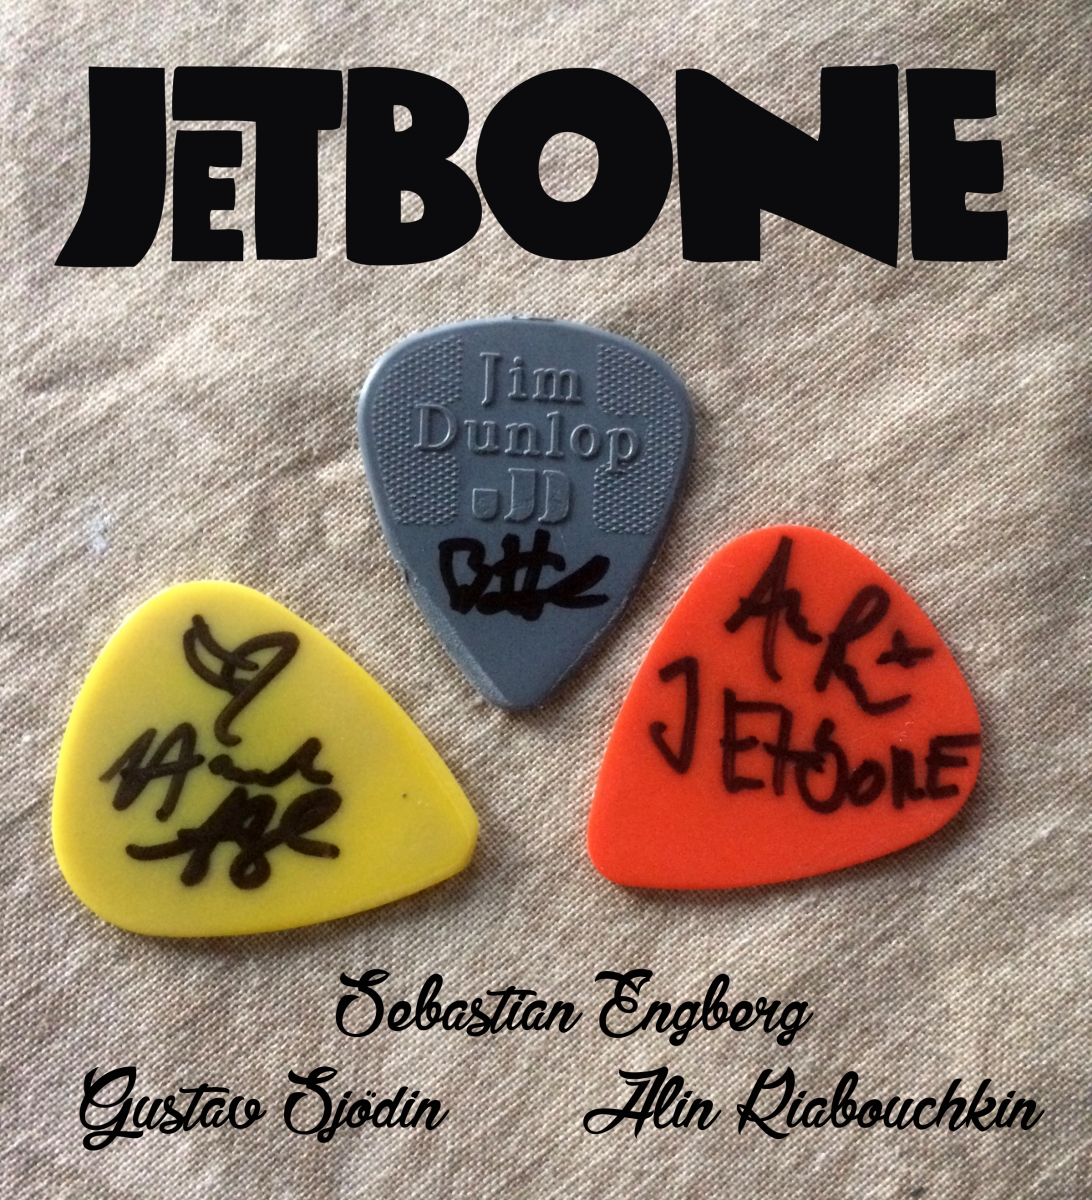 Jetbone